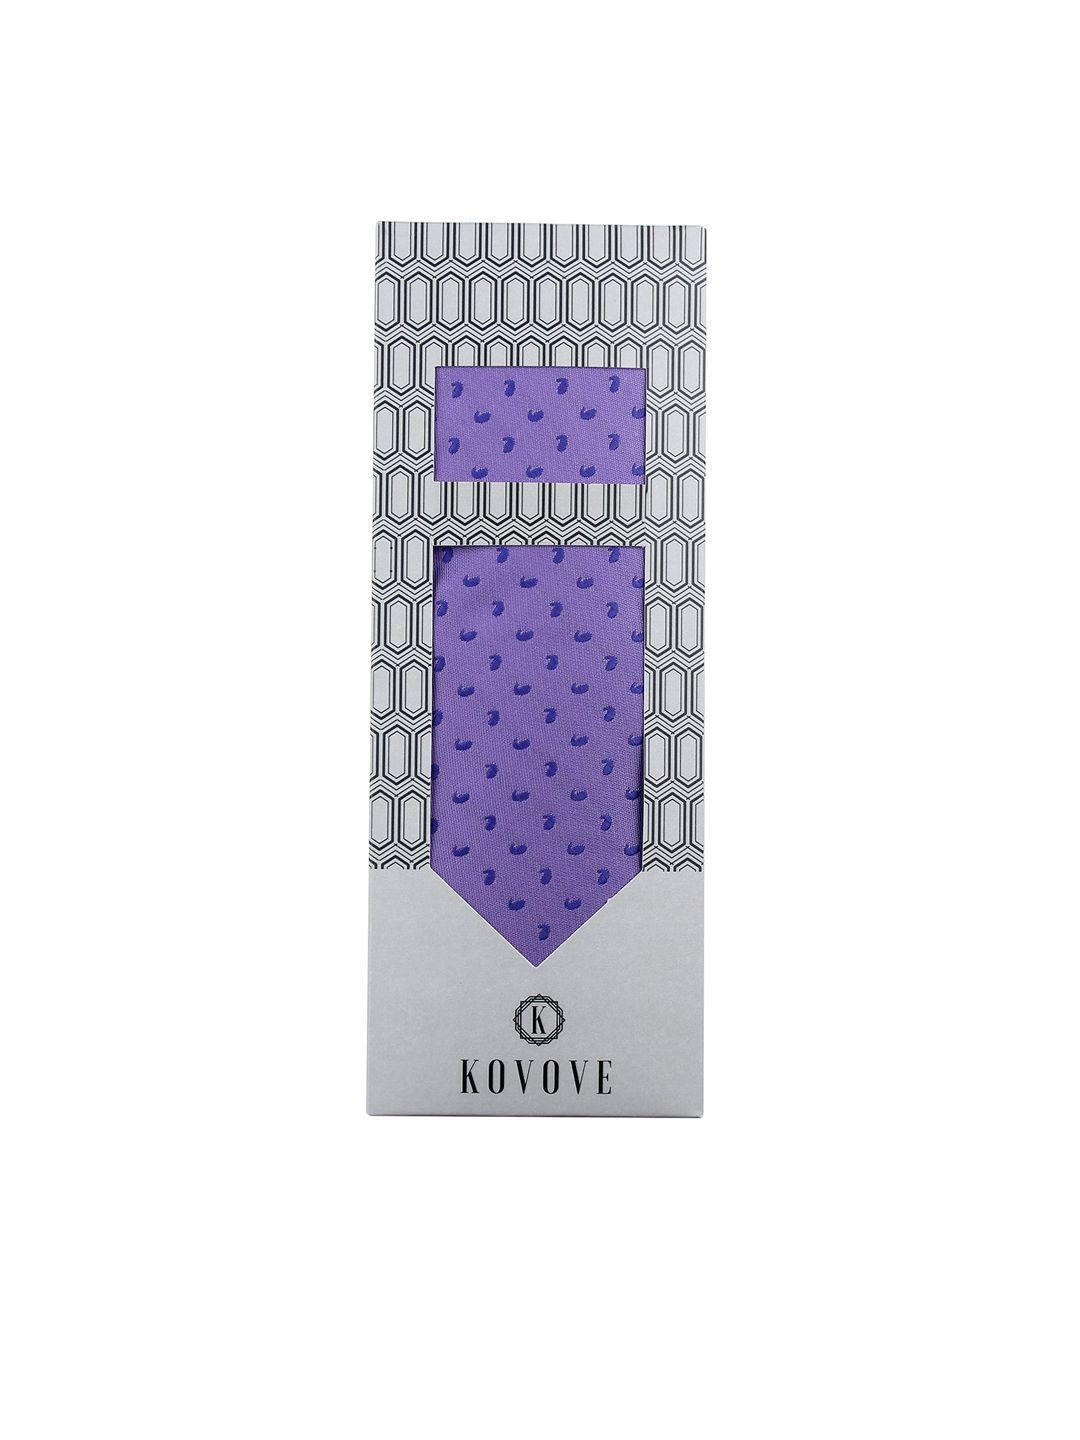 kovove purple abstract tie & pocket square gift set